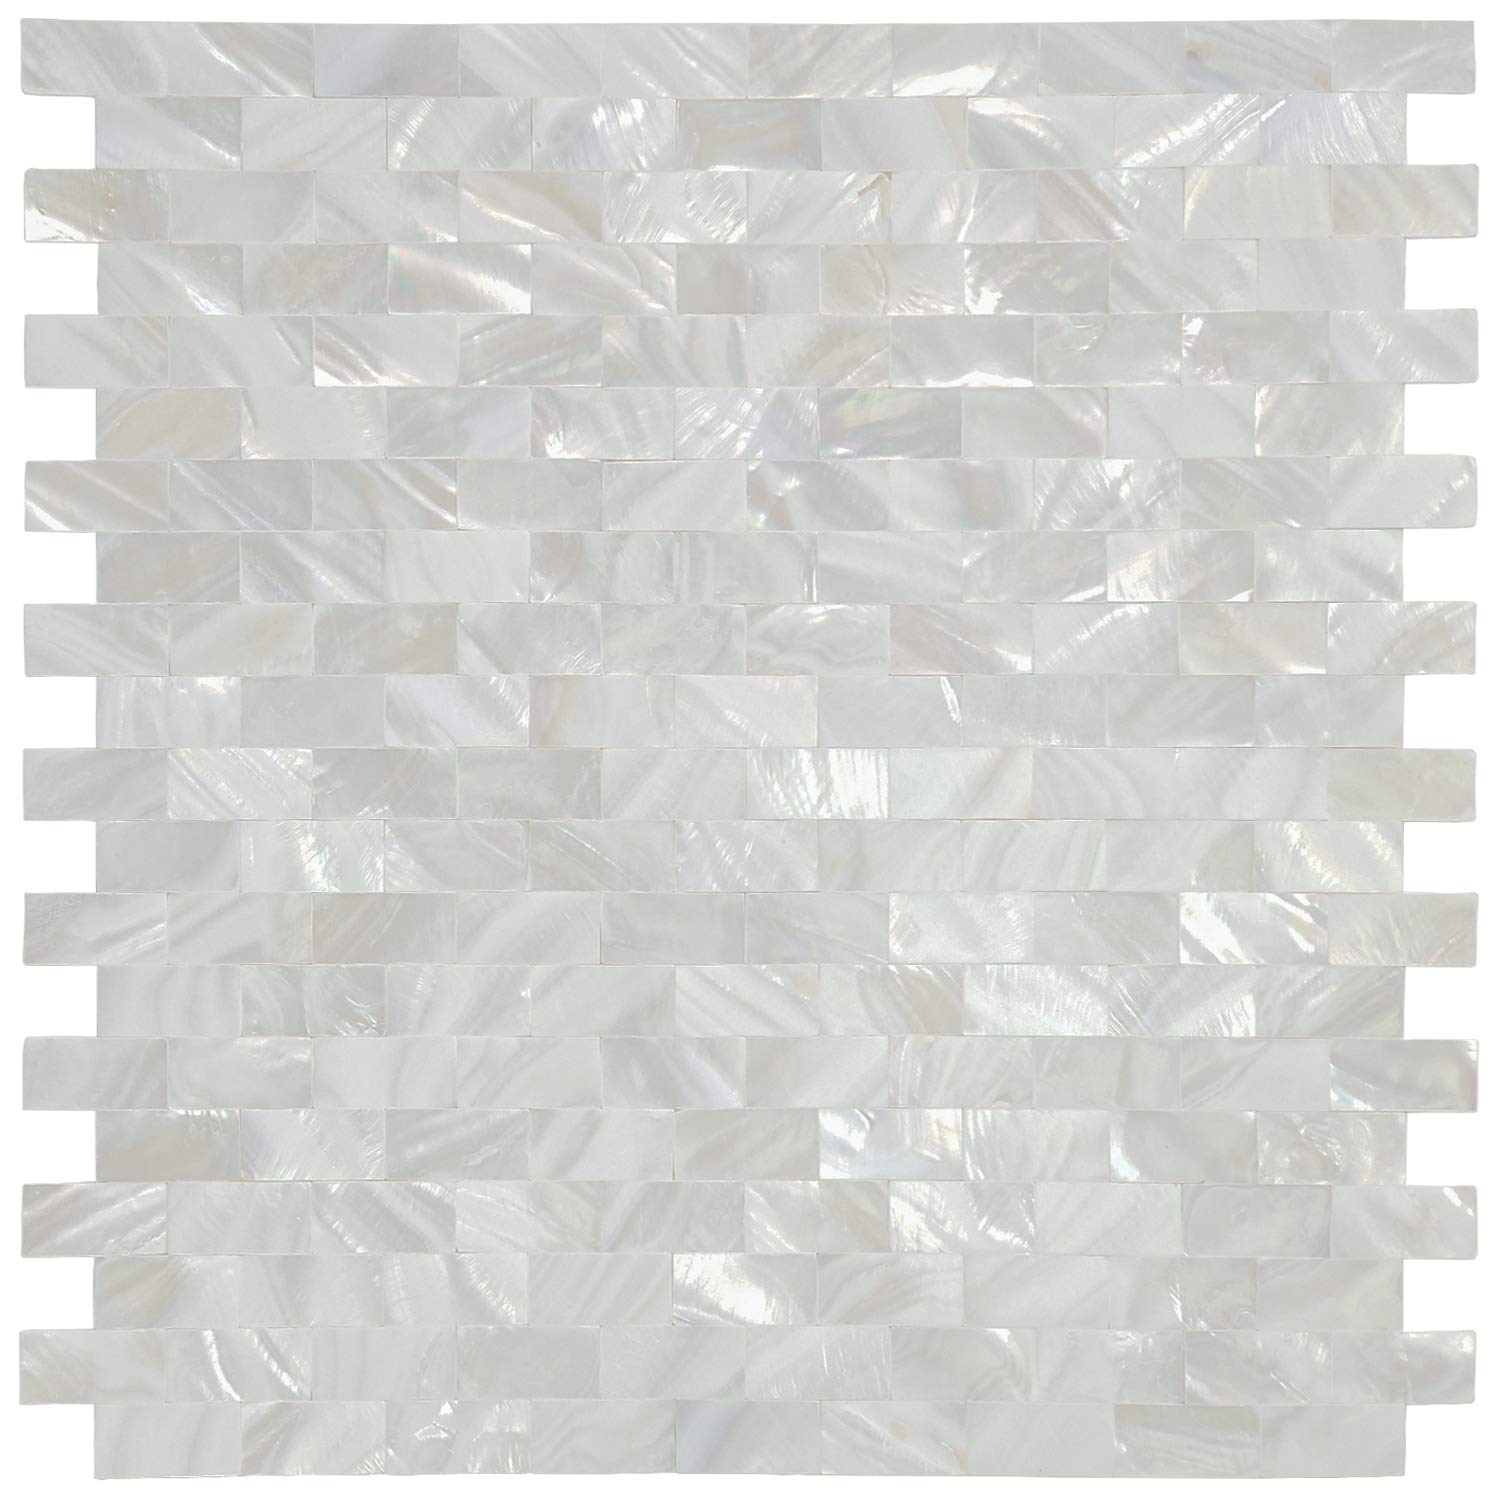 Art3d Mother of Pearl Shell Mosaic Tile for Kitchen Backsplash, 12"x12" (10 Tiles)